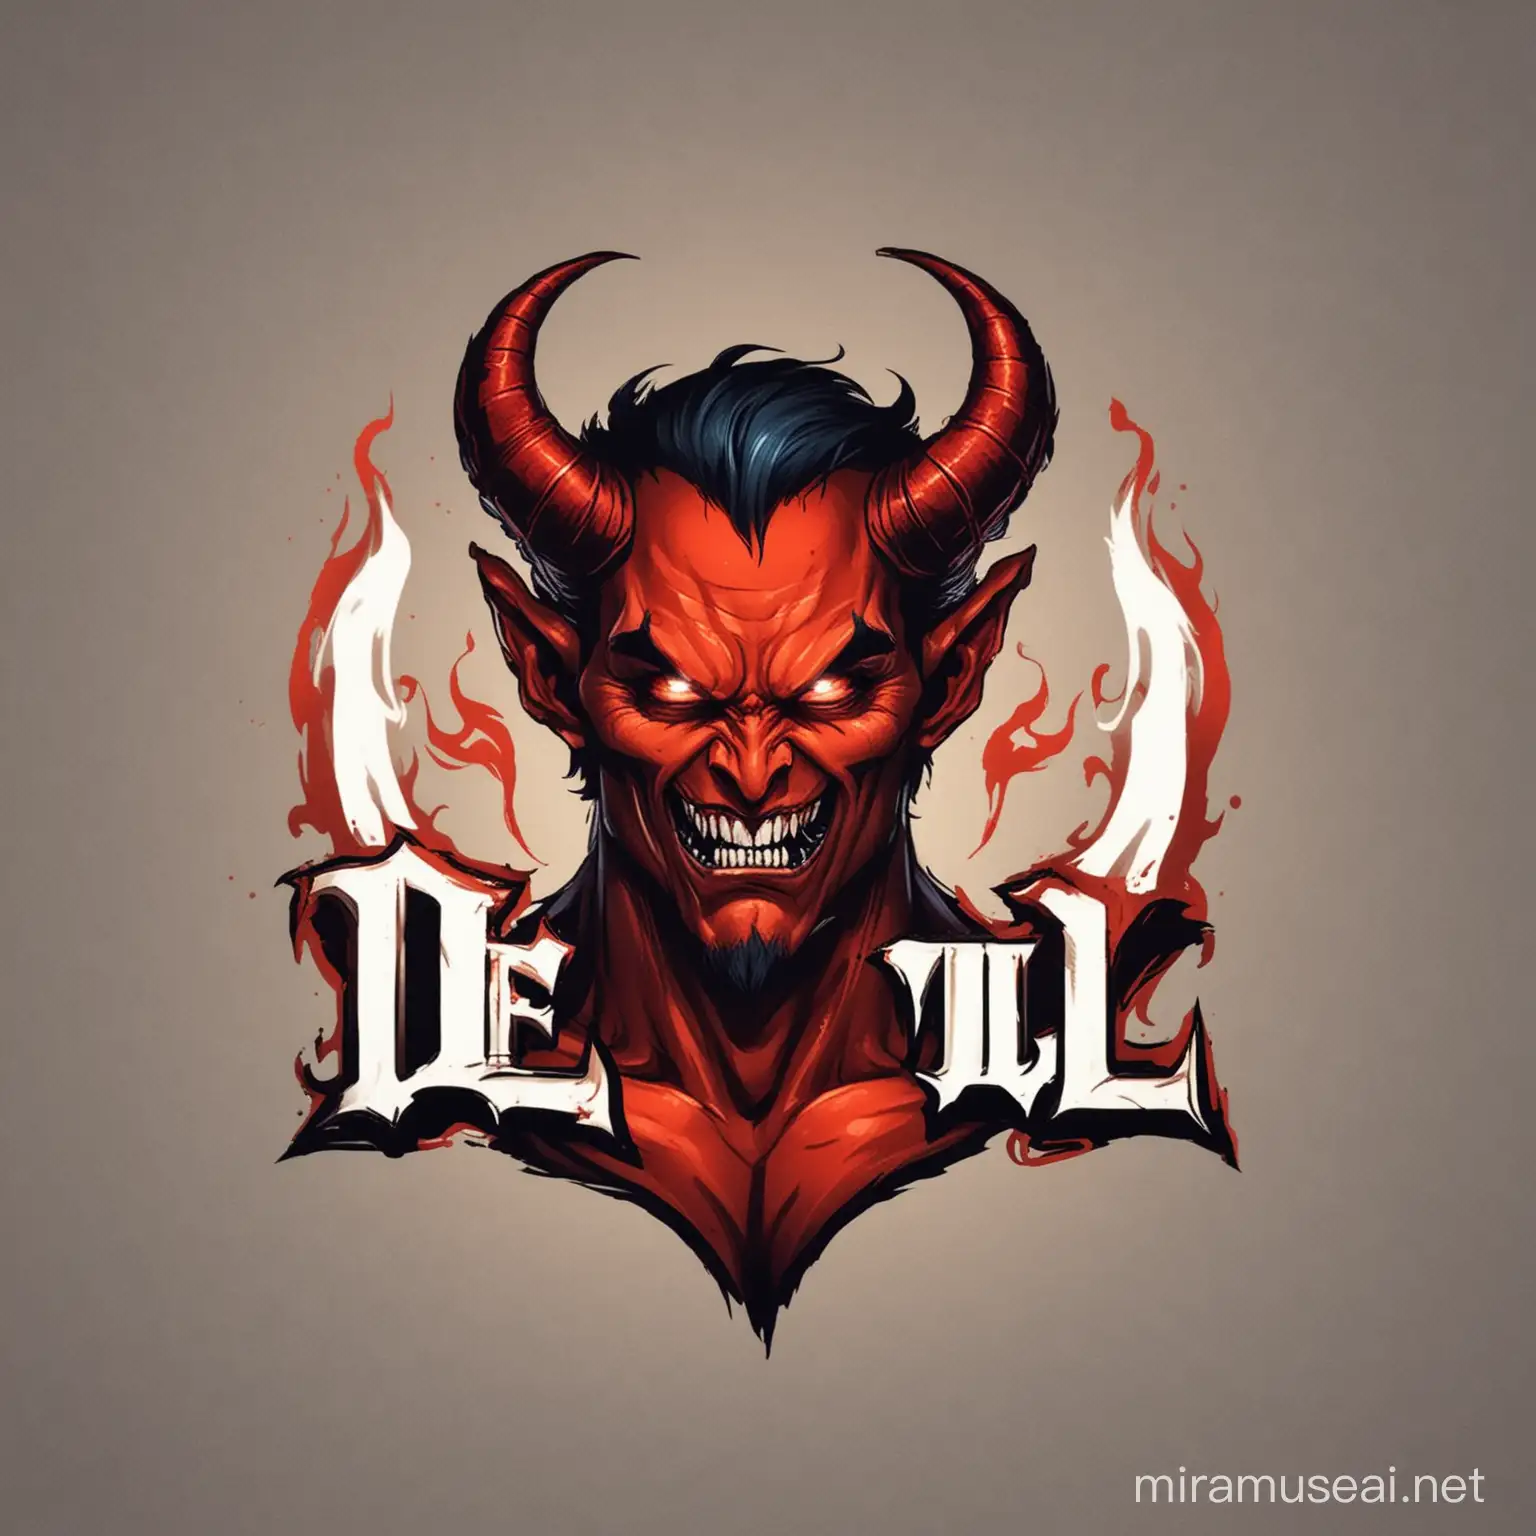 create a logo or avatar for devil 